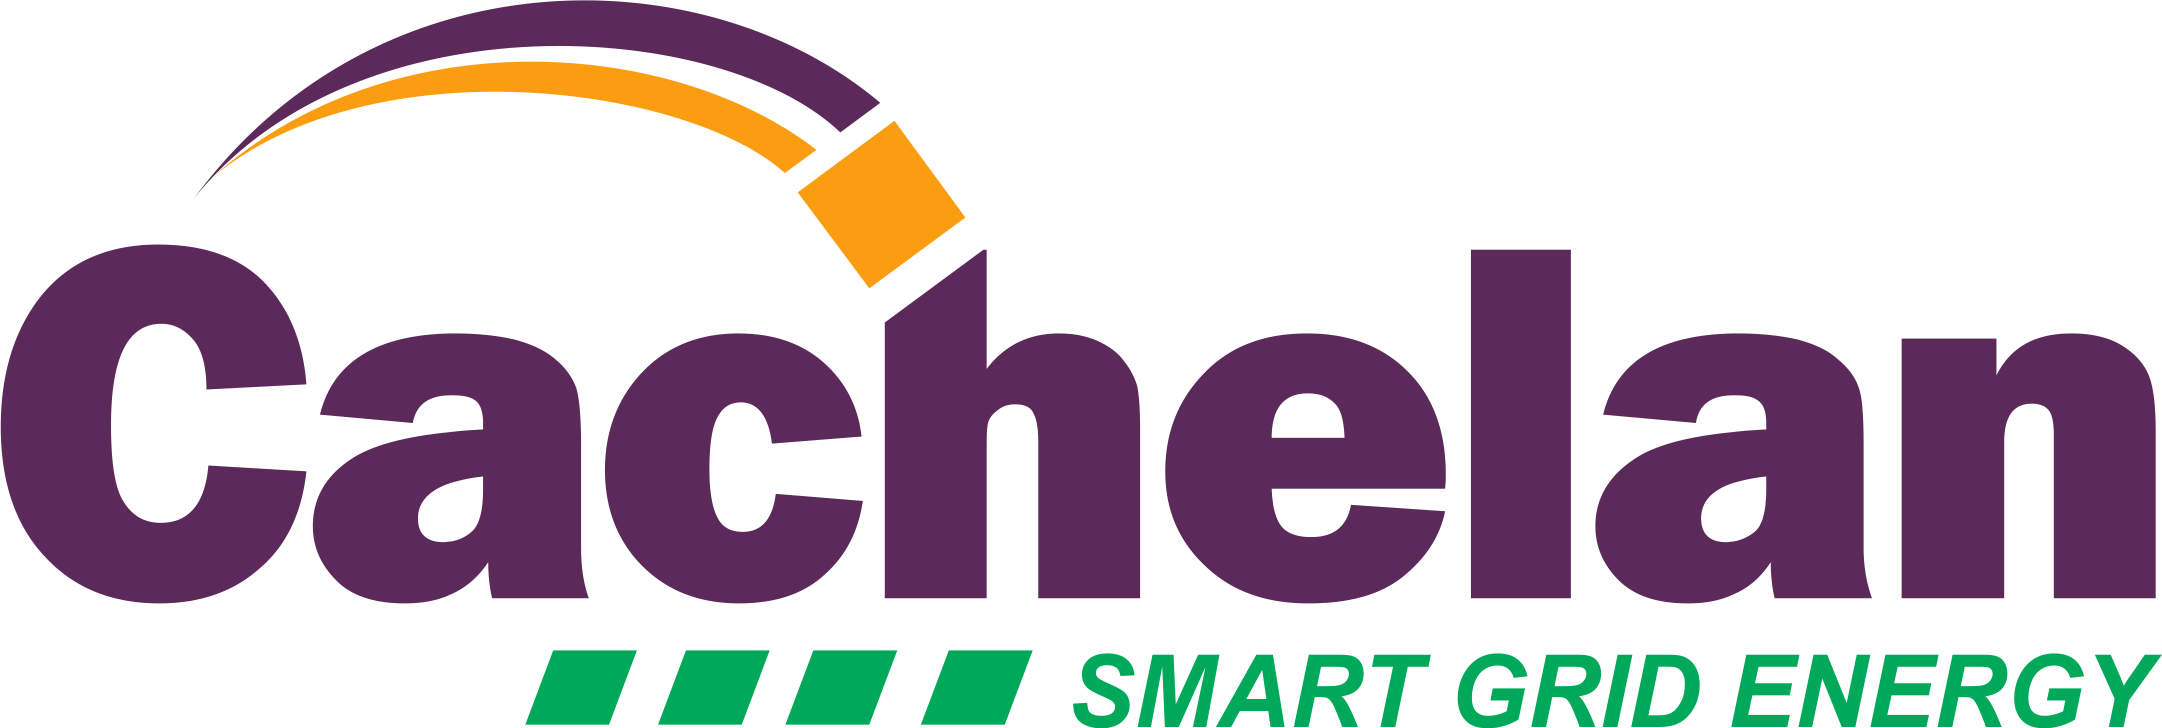 Cachelan Smart Grid Energy Logo - Boston Arts Academy Logo (2162x728)